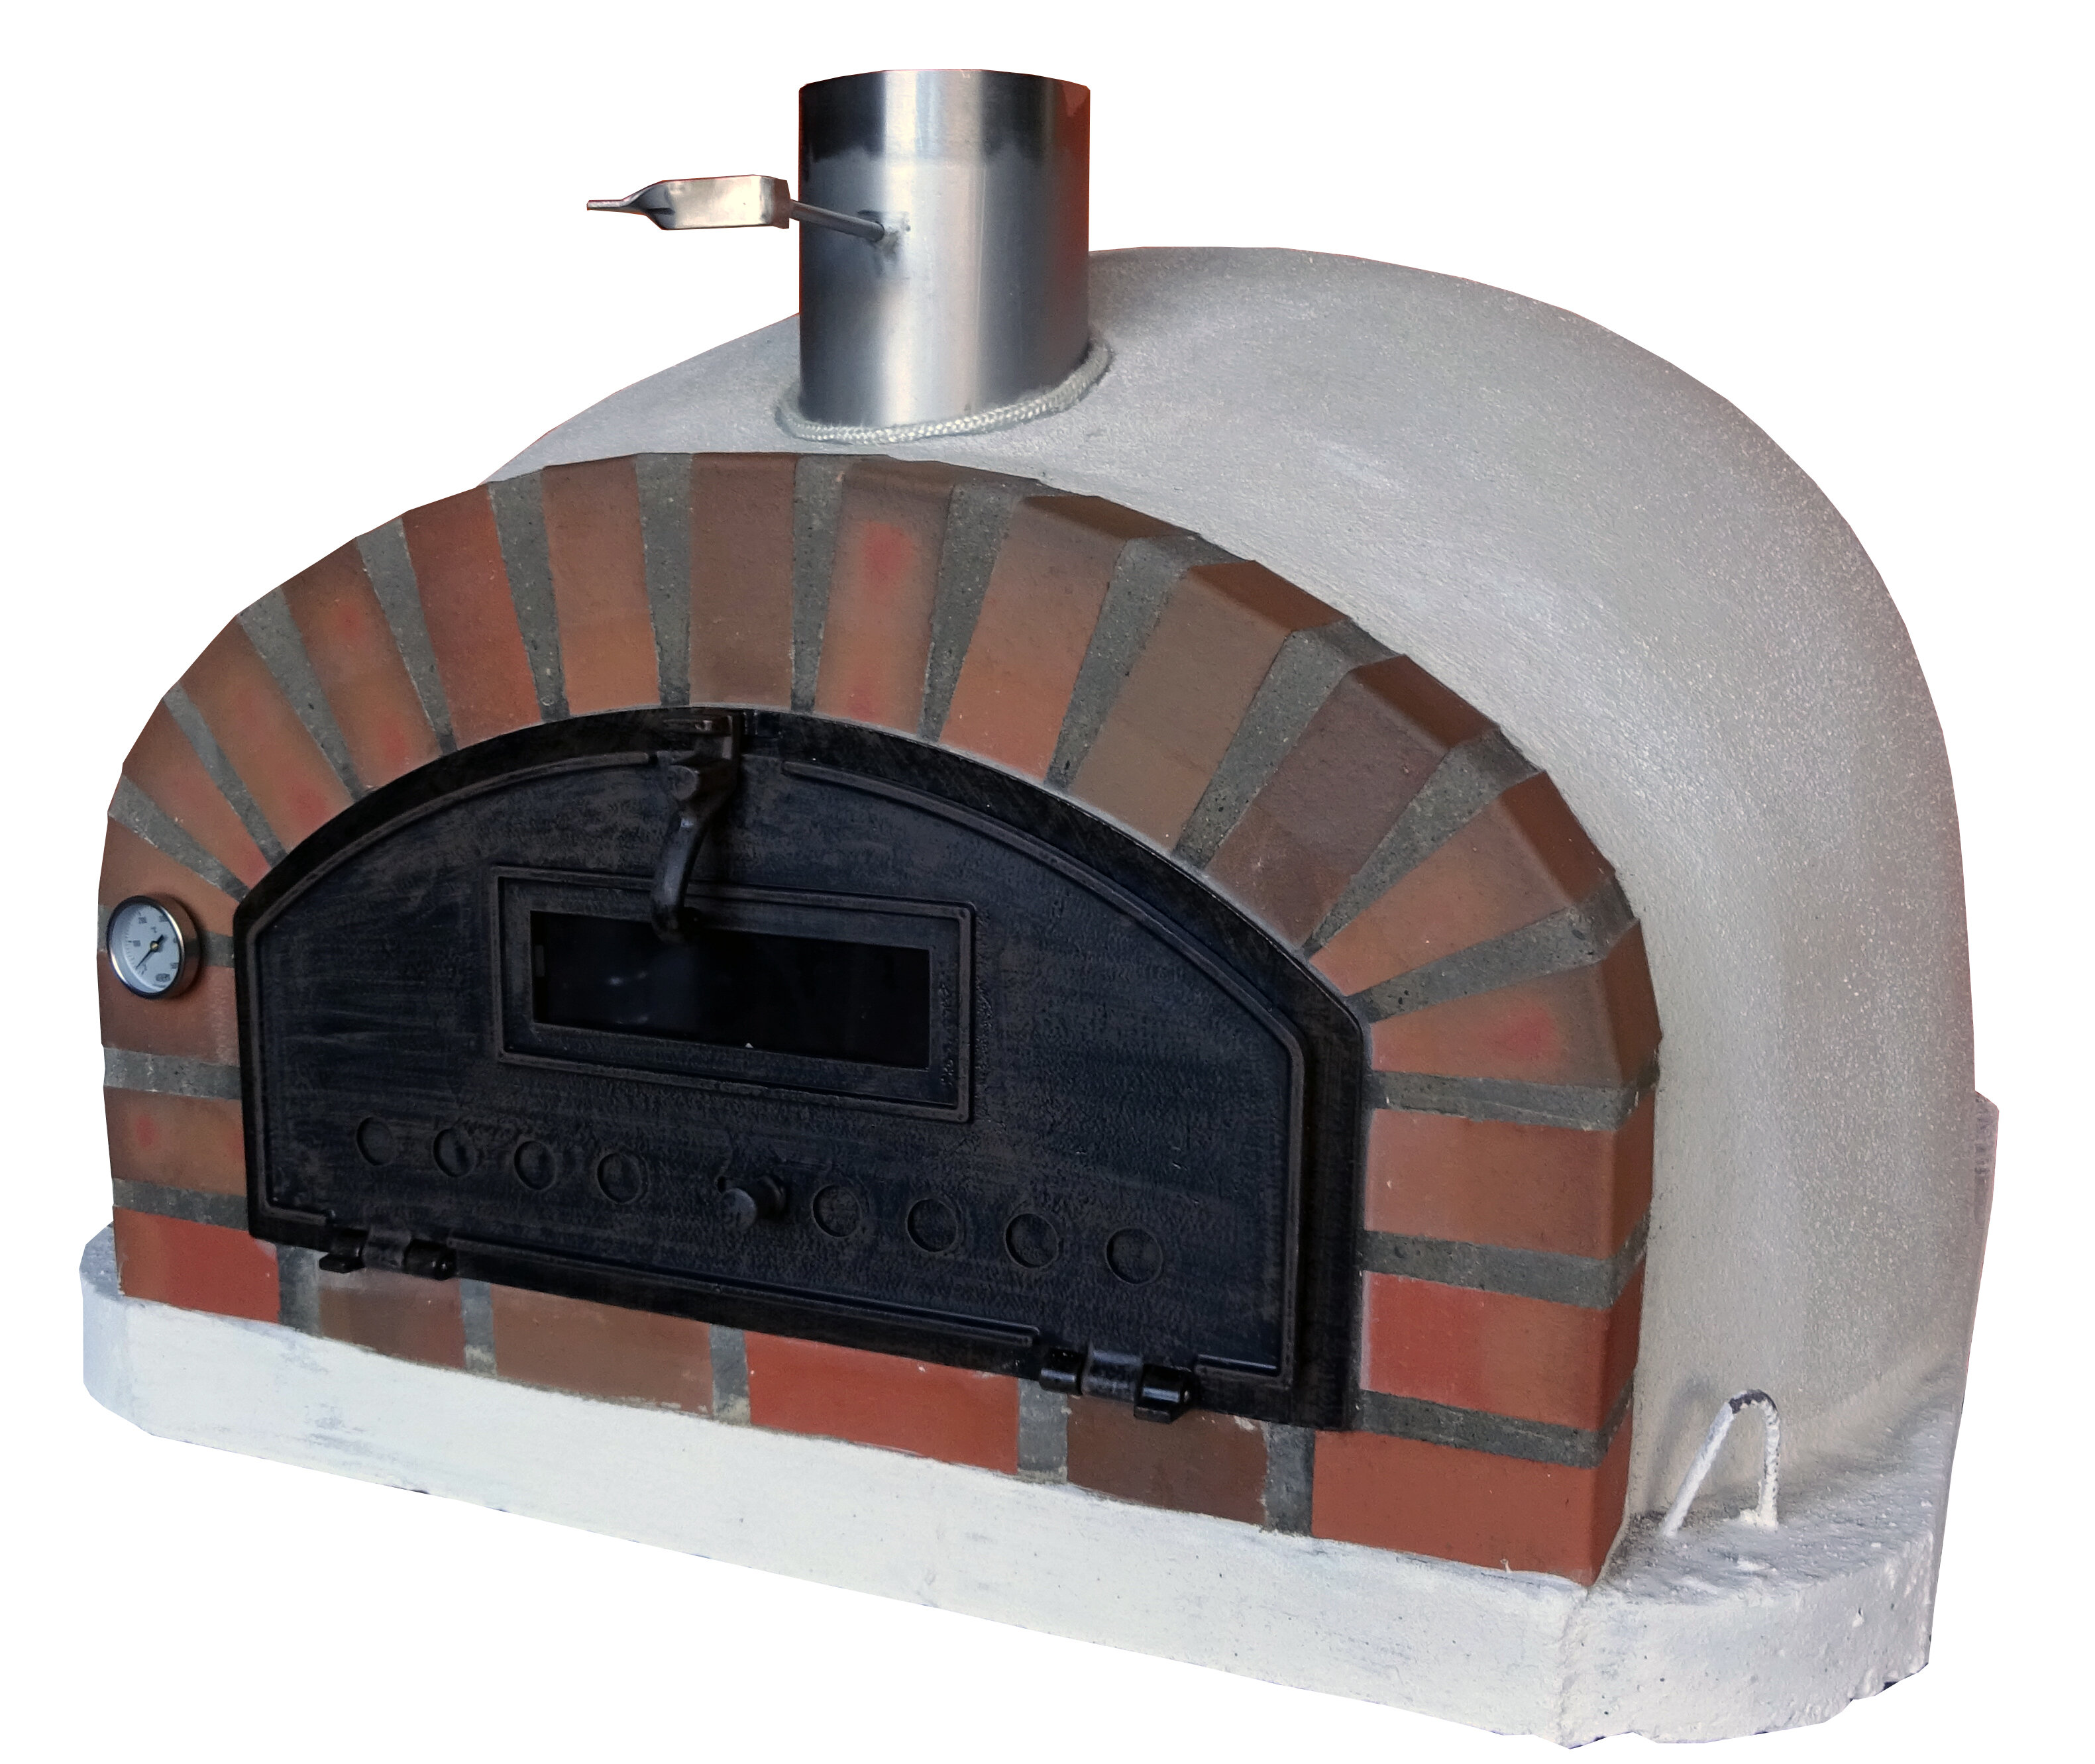 Pinnacolo PREMIO Wood Fired Pizza Oven - Patio & Pizza Outdoor Furnishings